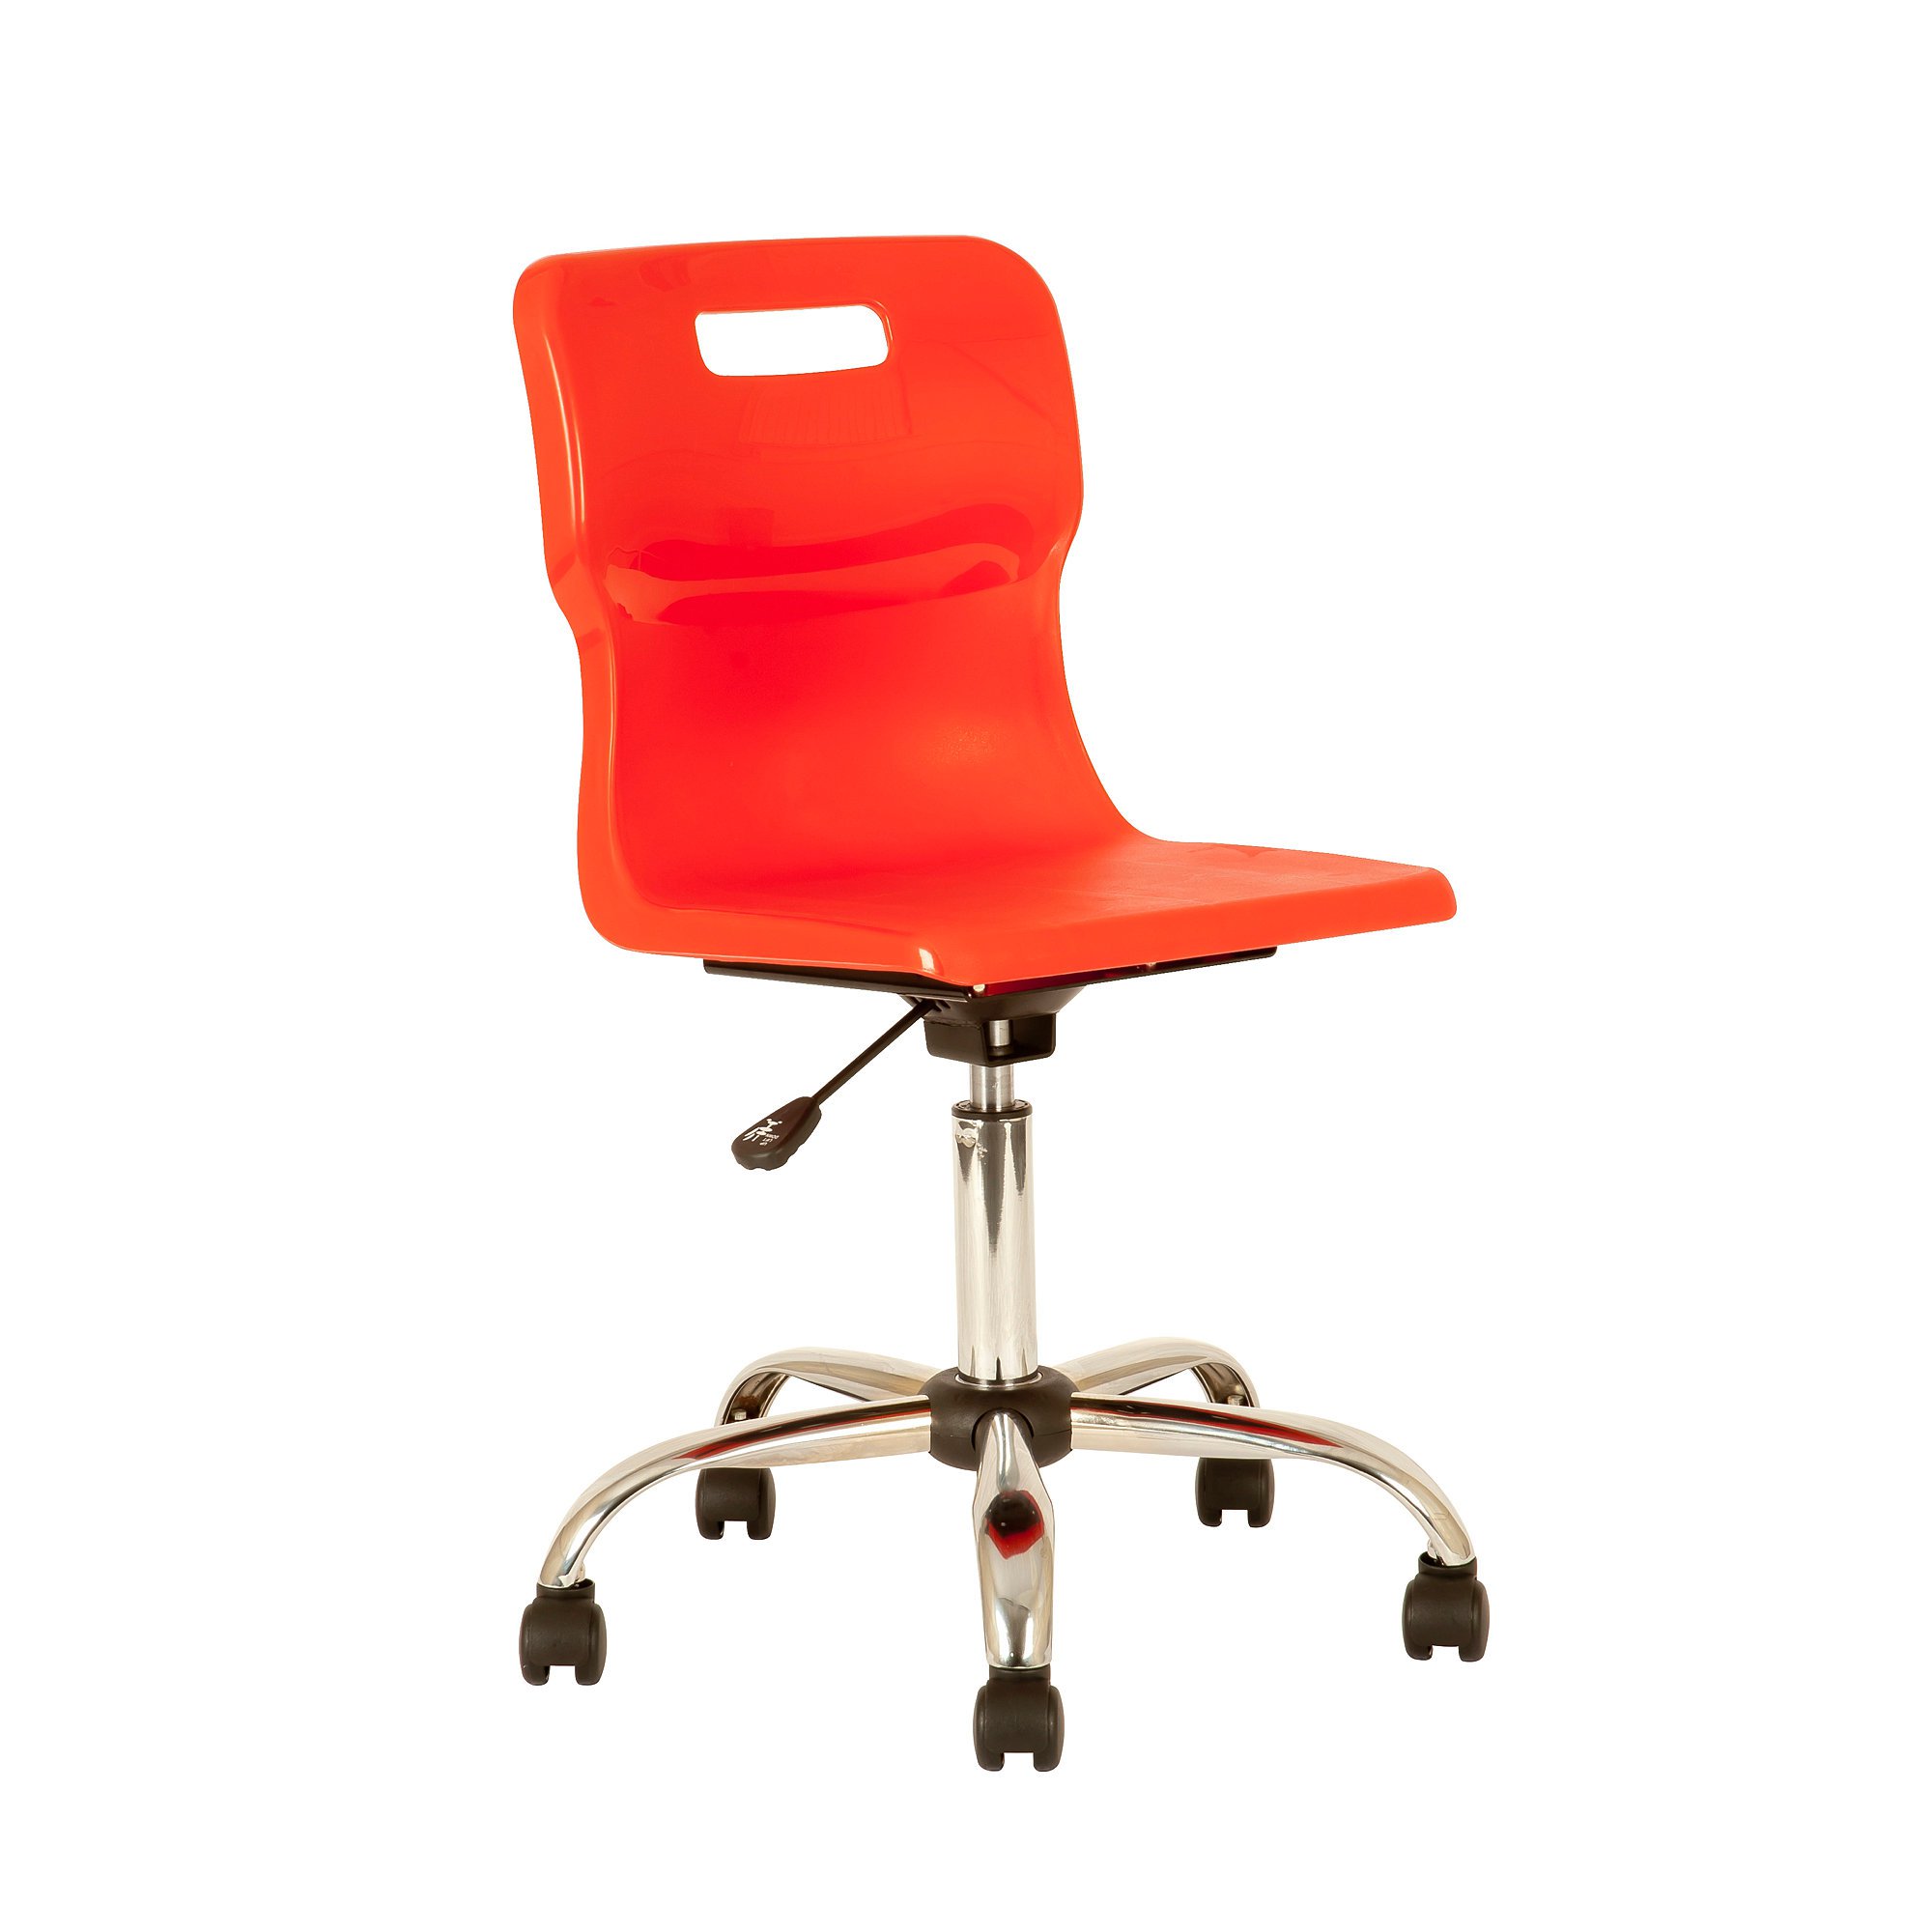 Plastic swivel chair, ages 11+, 465-555 mm, red, castors